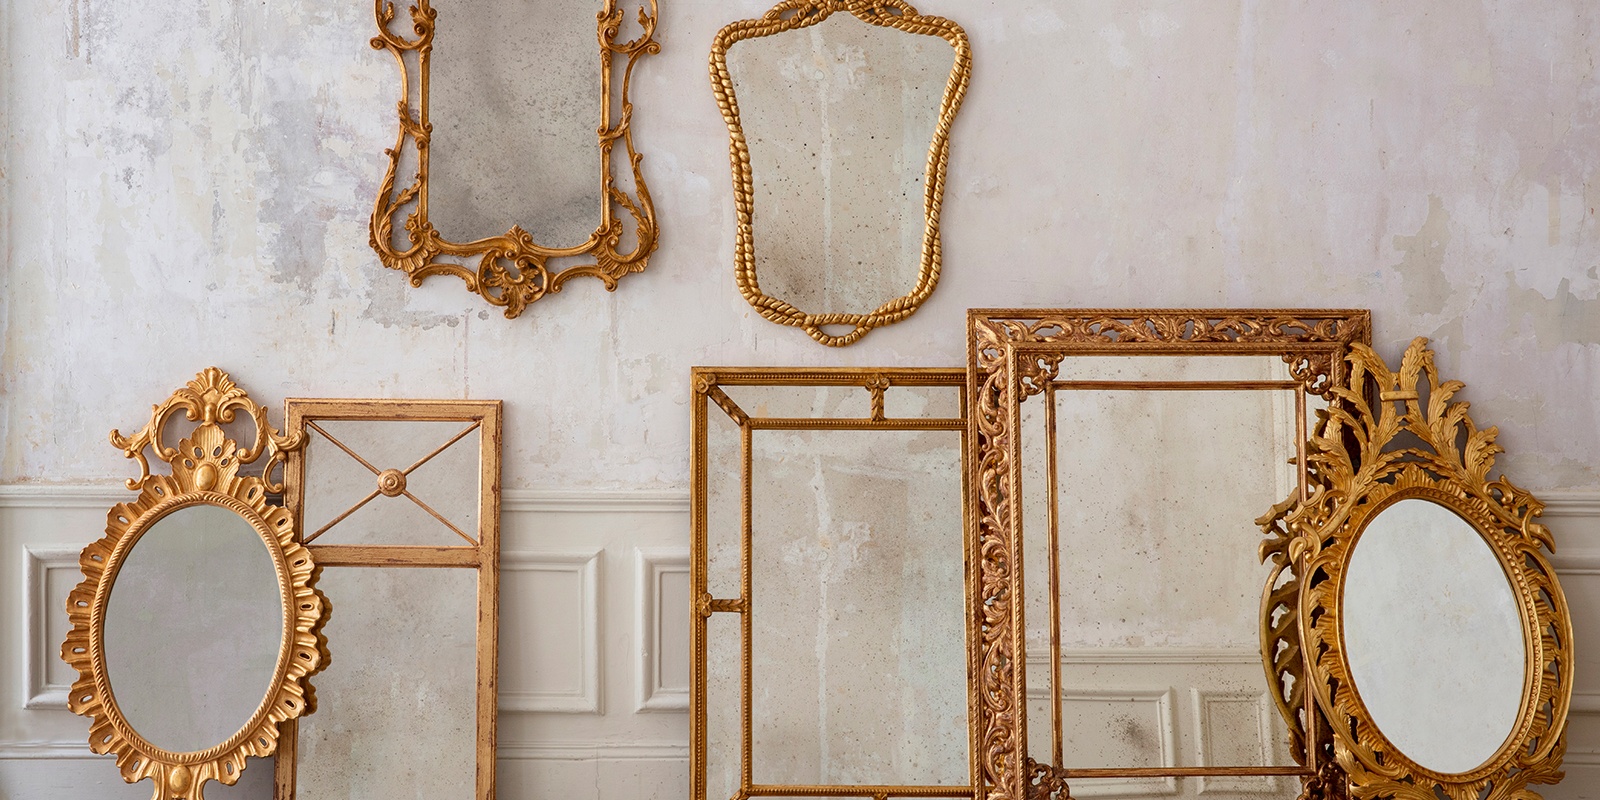 Mirrors - Beaumont & Fletcher